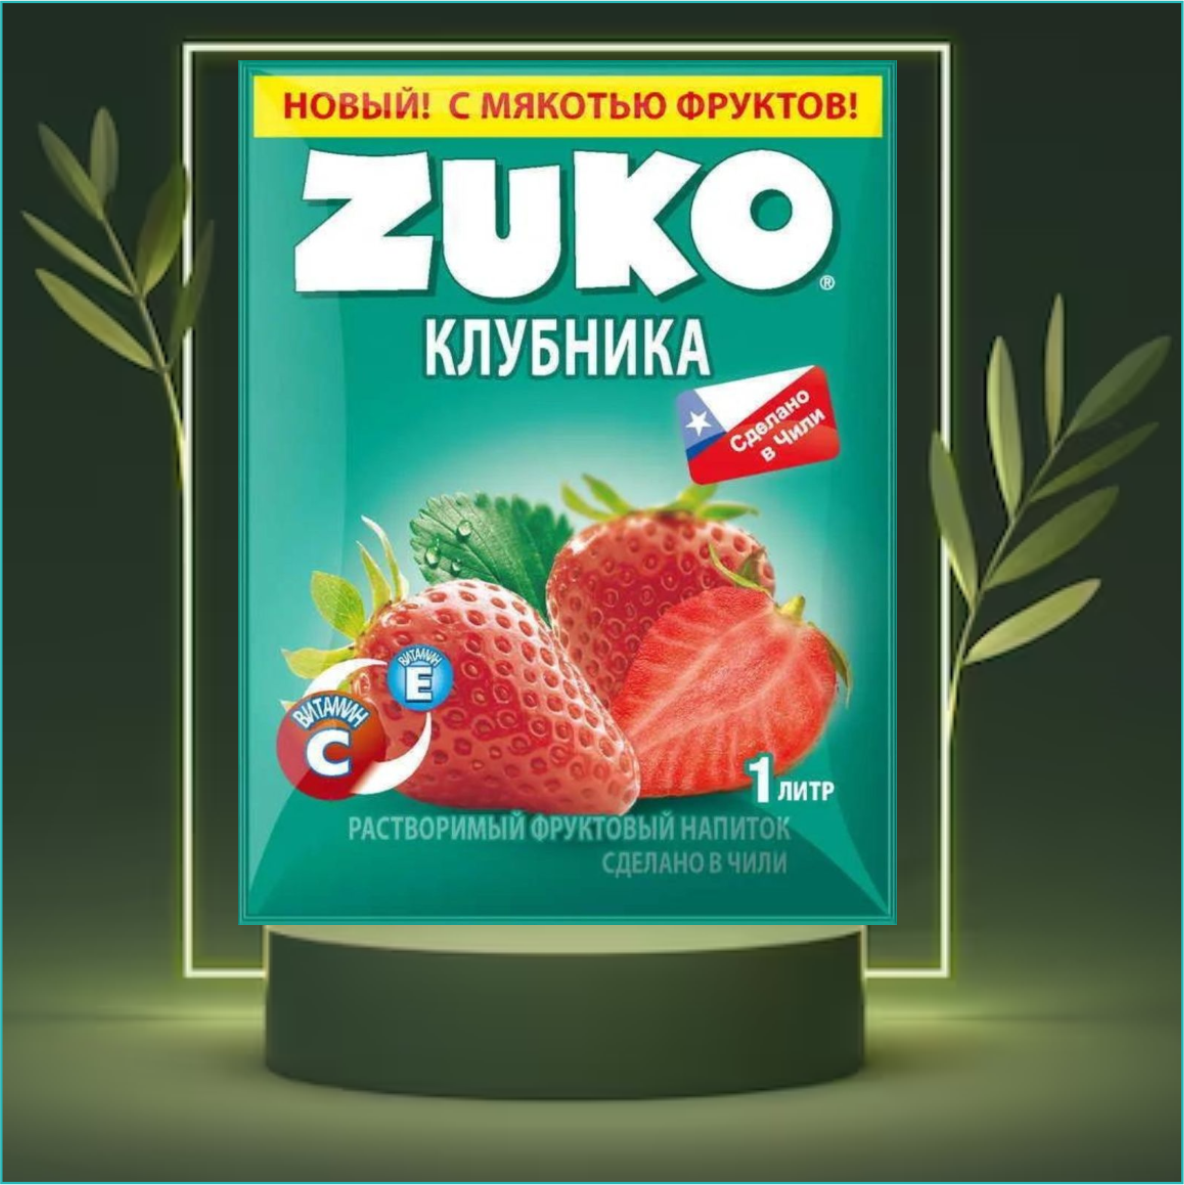 ZUKO - Растворимый напиток (Клубника)